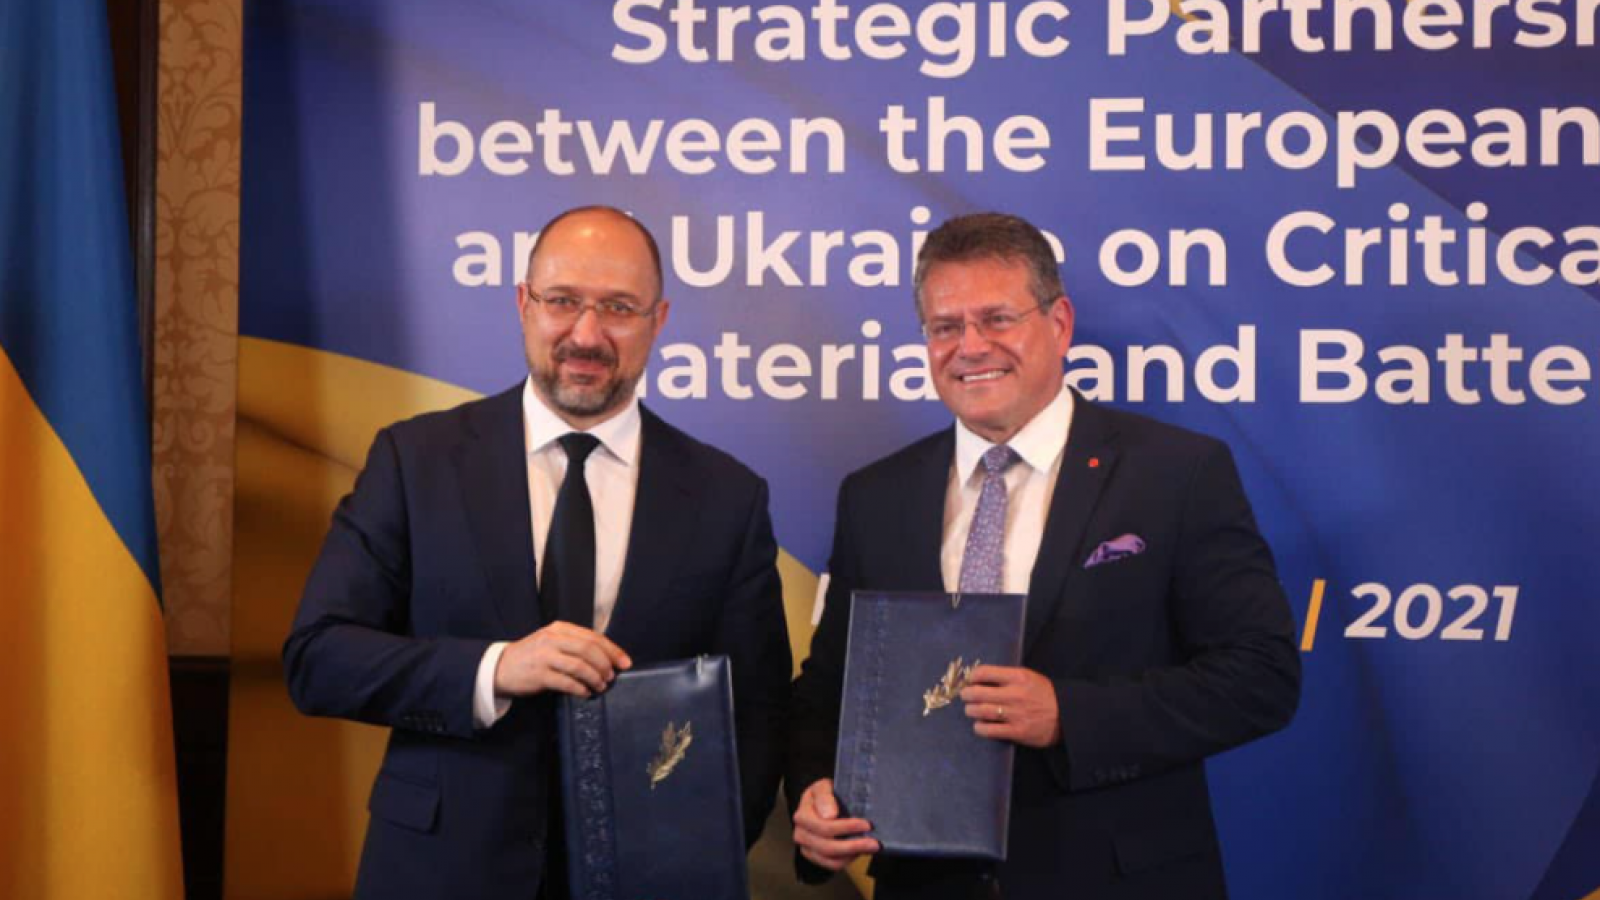 EU and Ukraine kick-start strategic partnership on raw materials